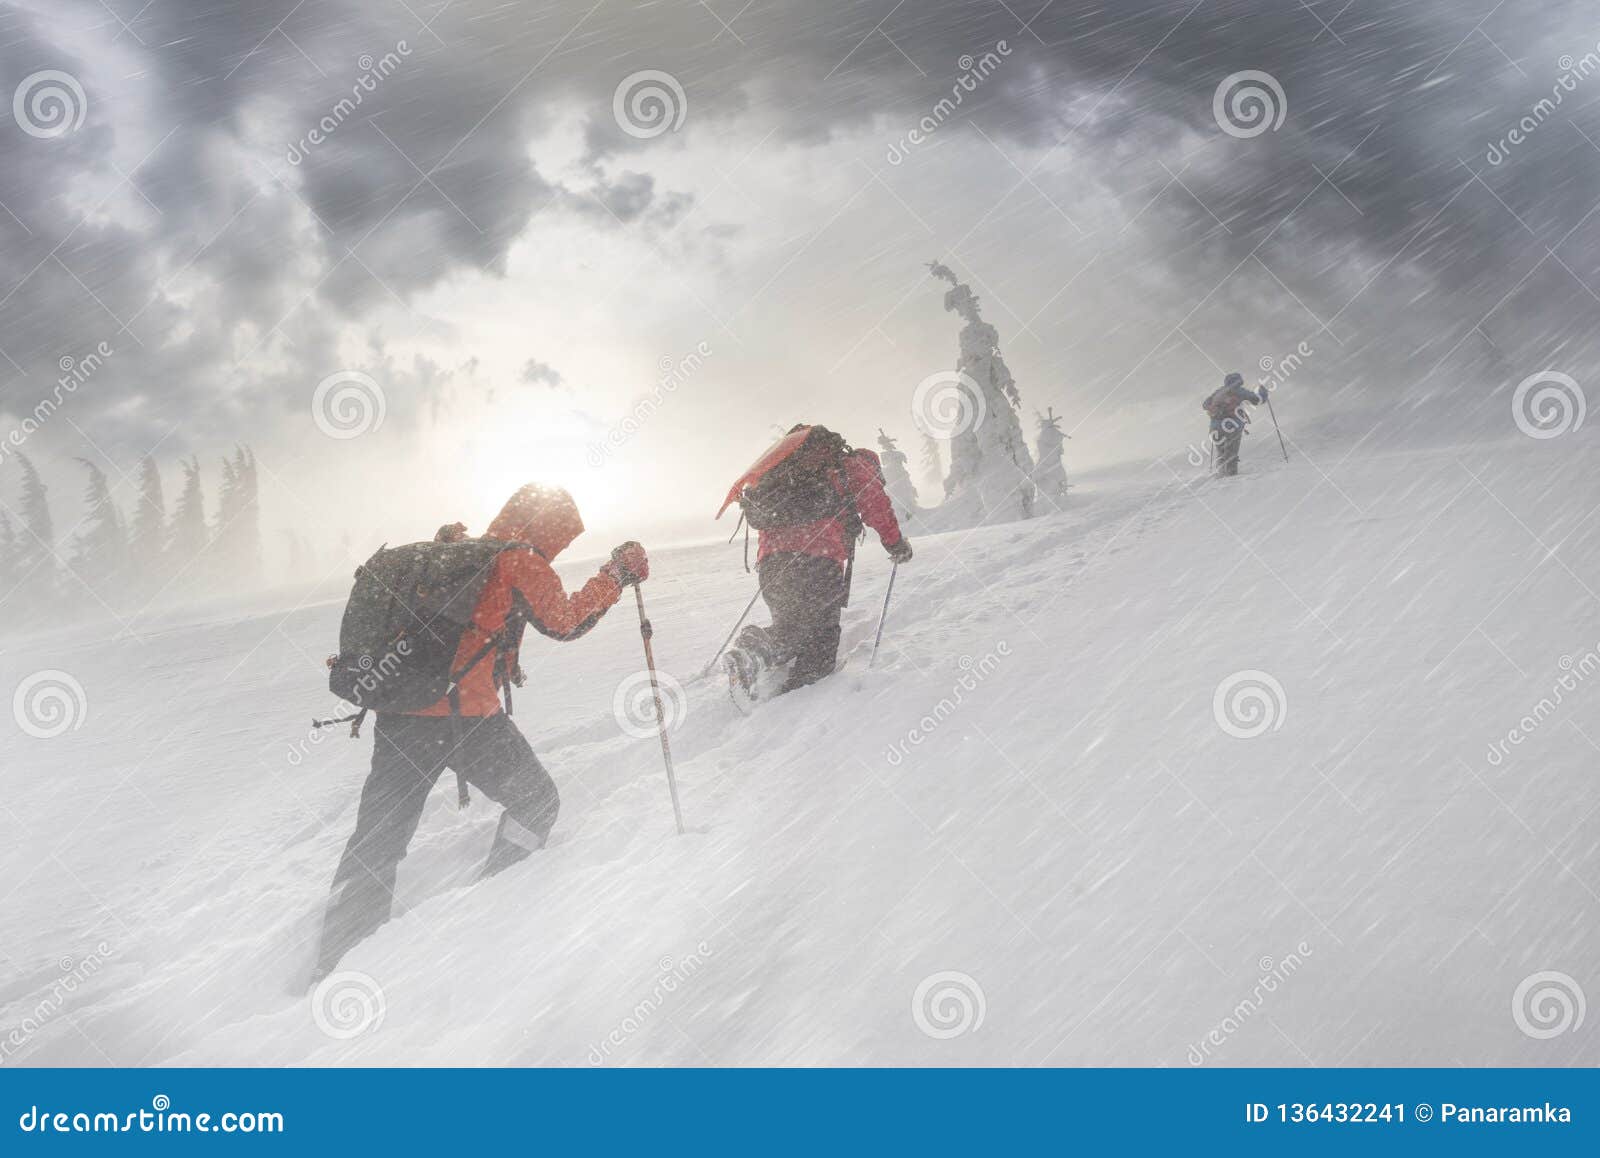 climbers in mountain snowfall